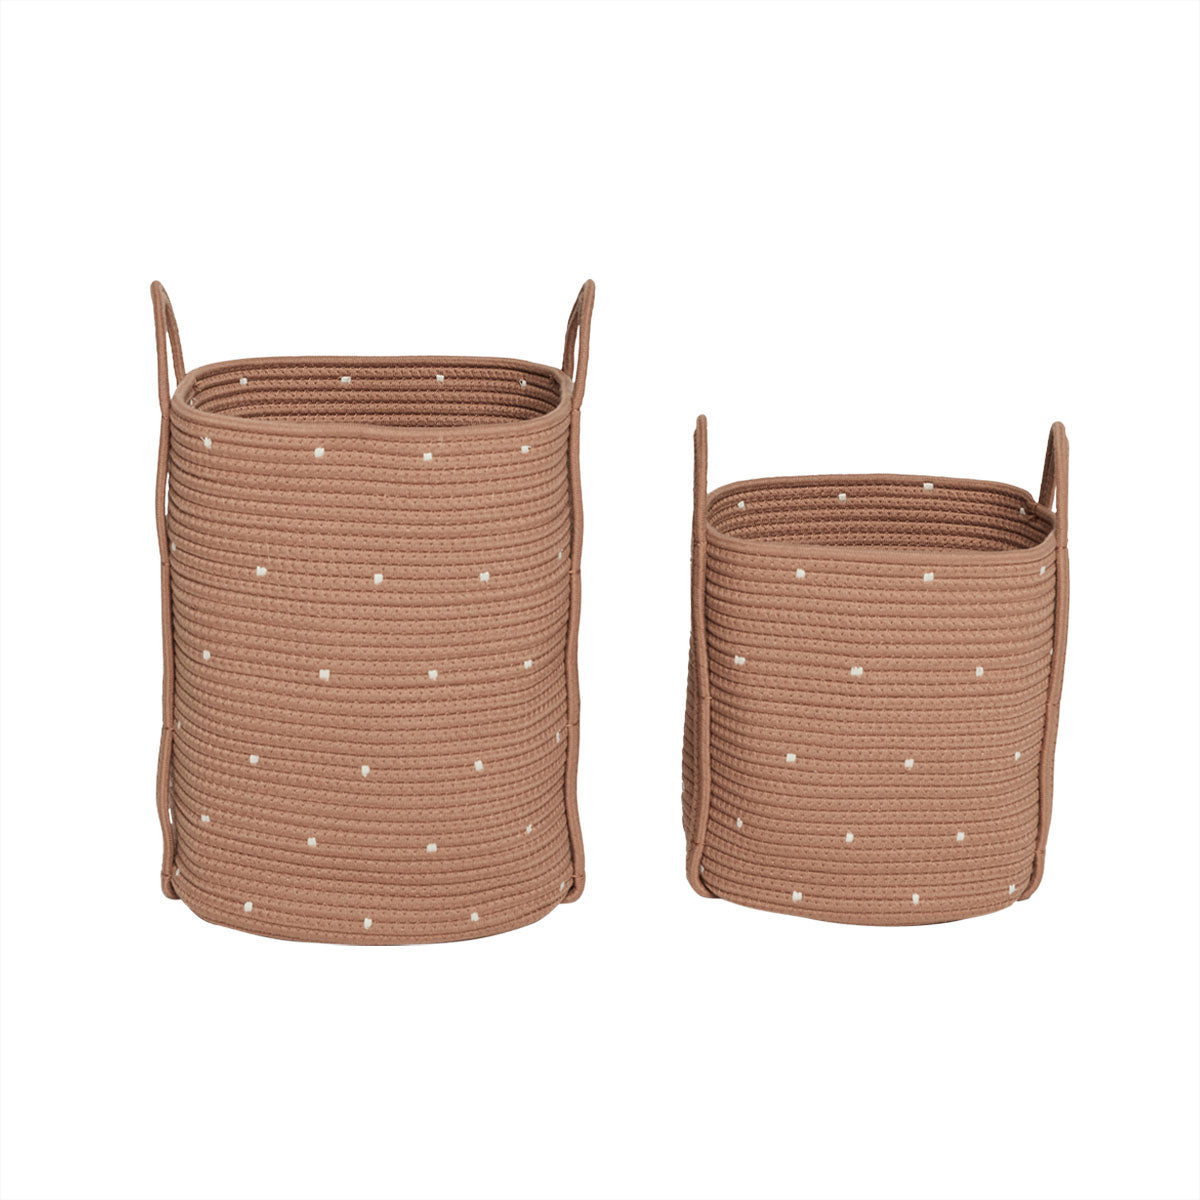 OYOY LIVING Dot Cotton Rope Basket - Set of 2 Storage